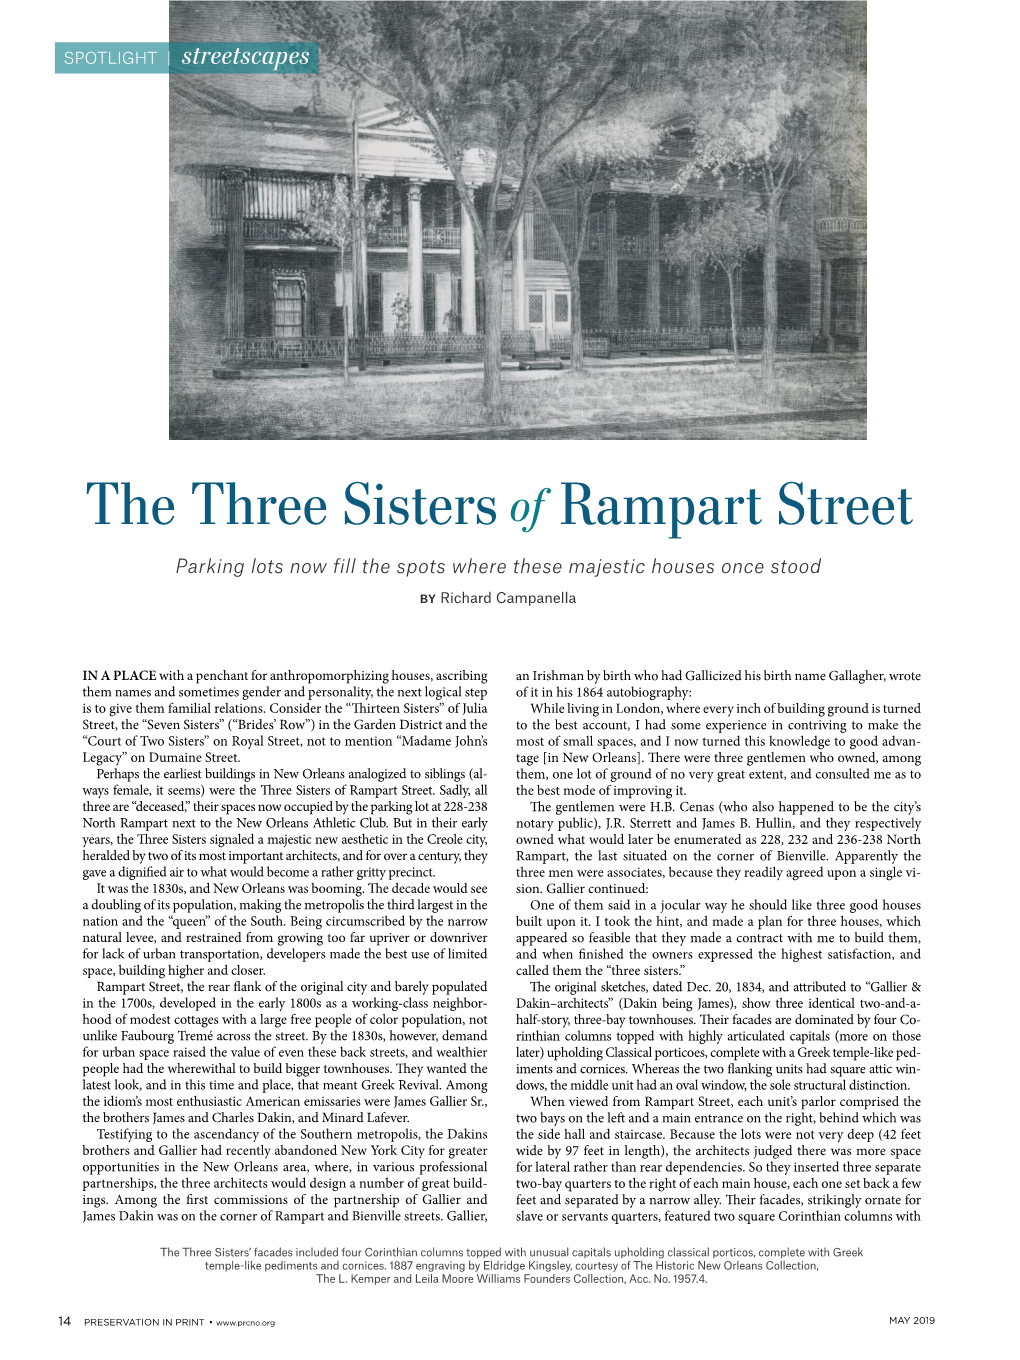 The Three Sisters Rampart Street